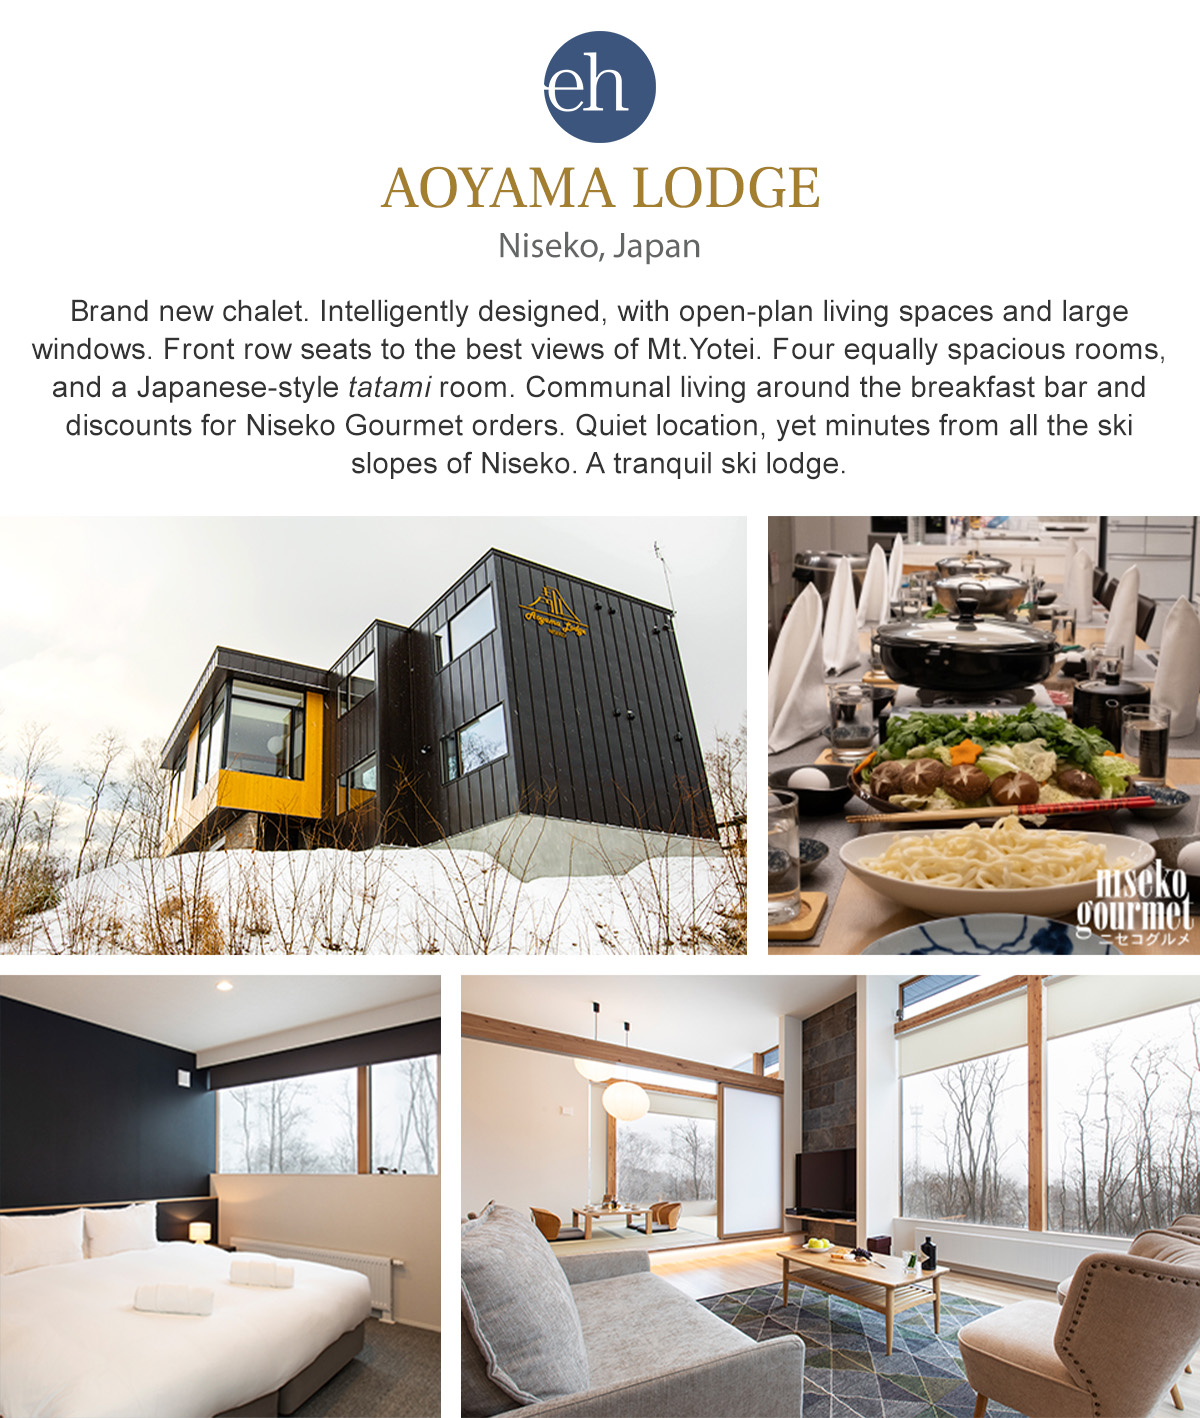 Aoyama Lodge - Niseko, Japan